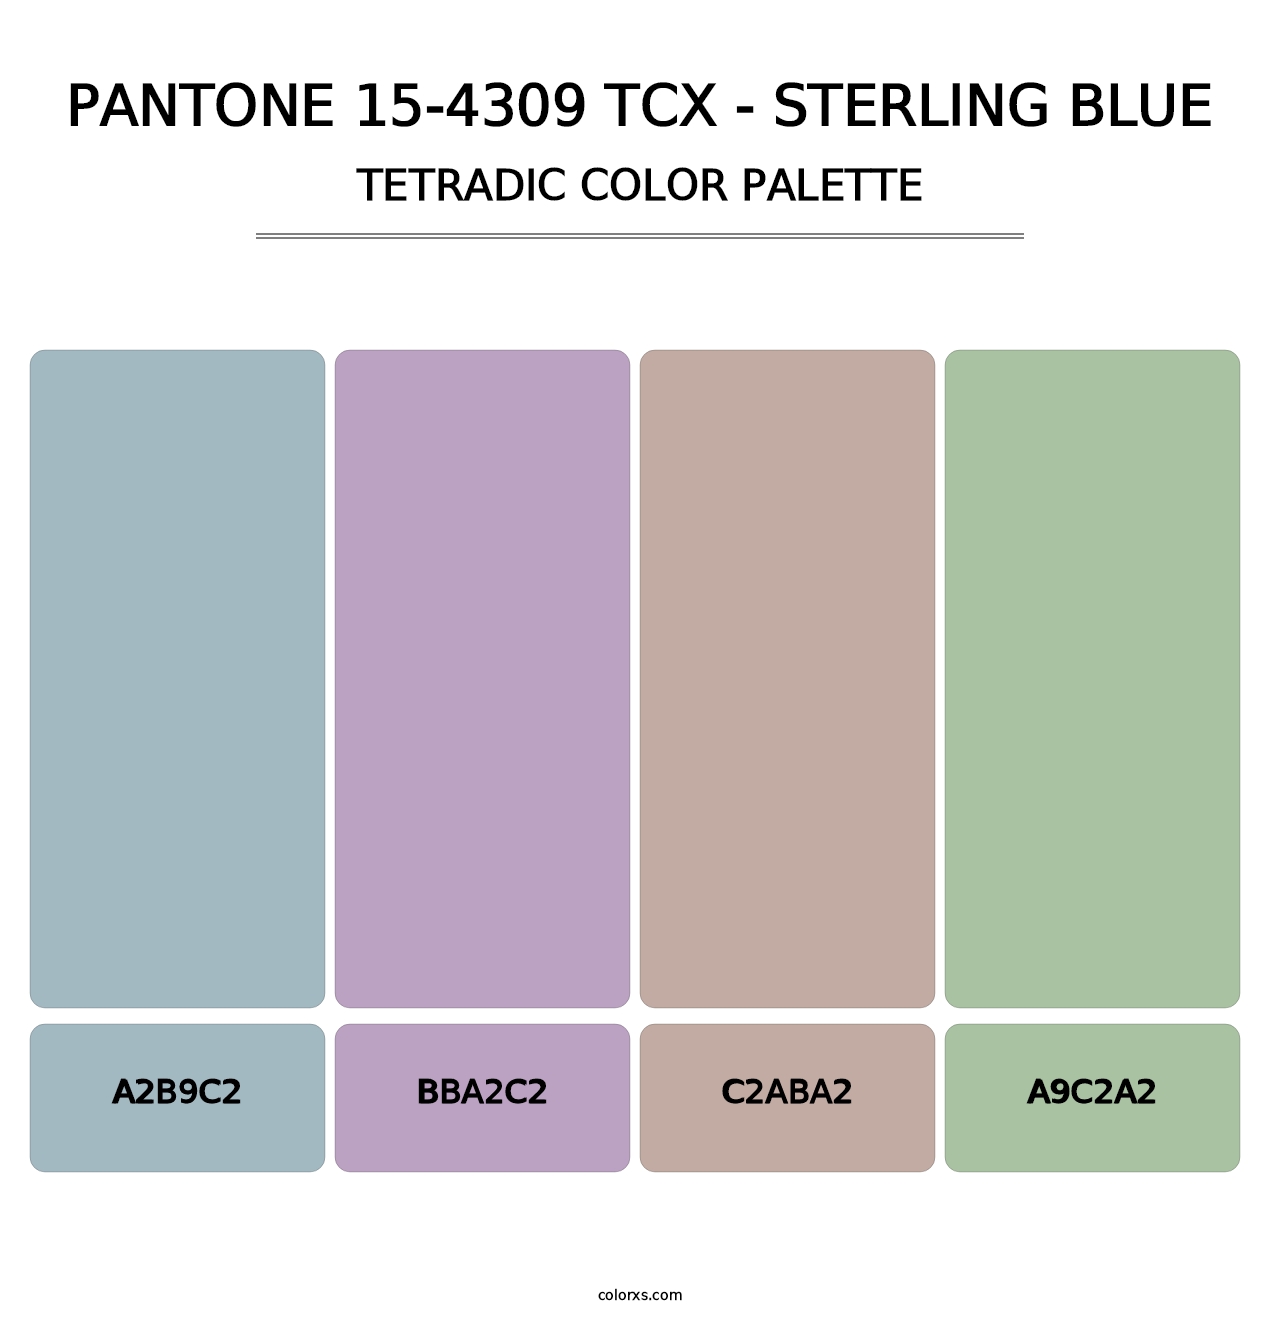 PANTONE 15-4309 TCX - Sterling Blue - Tetradic Color Palette